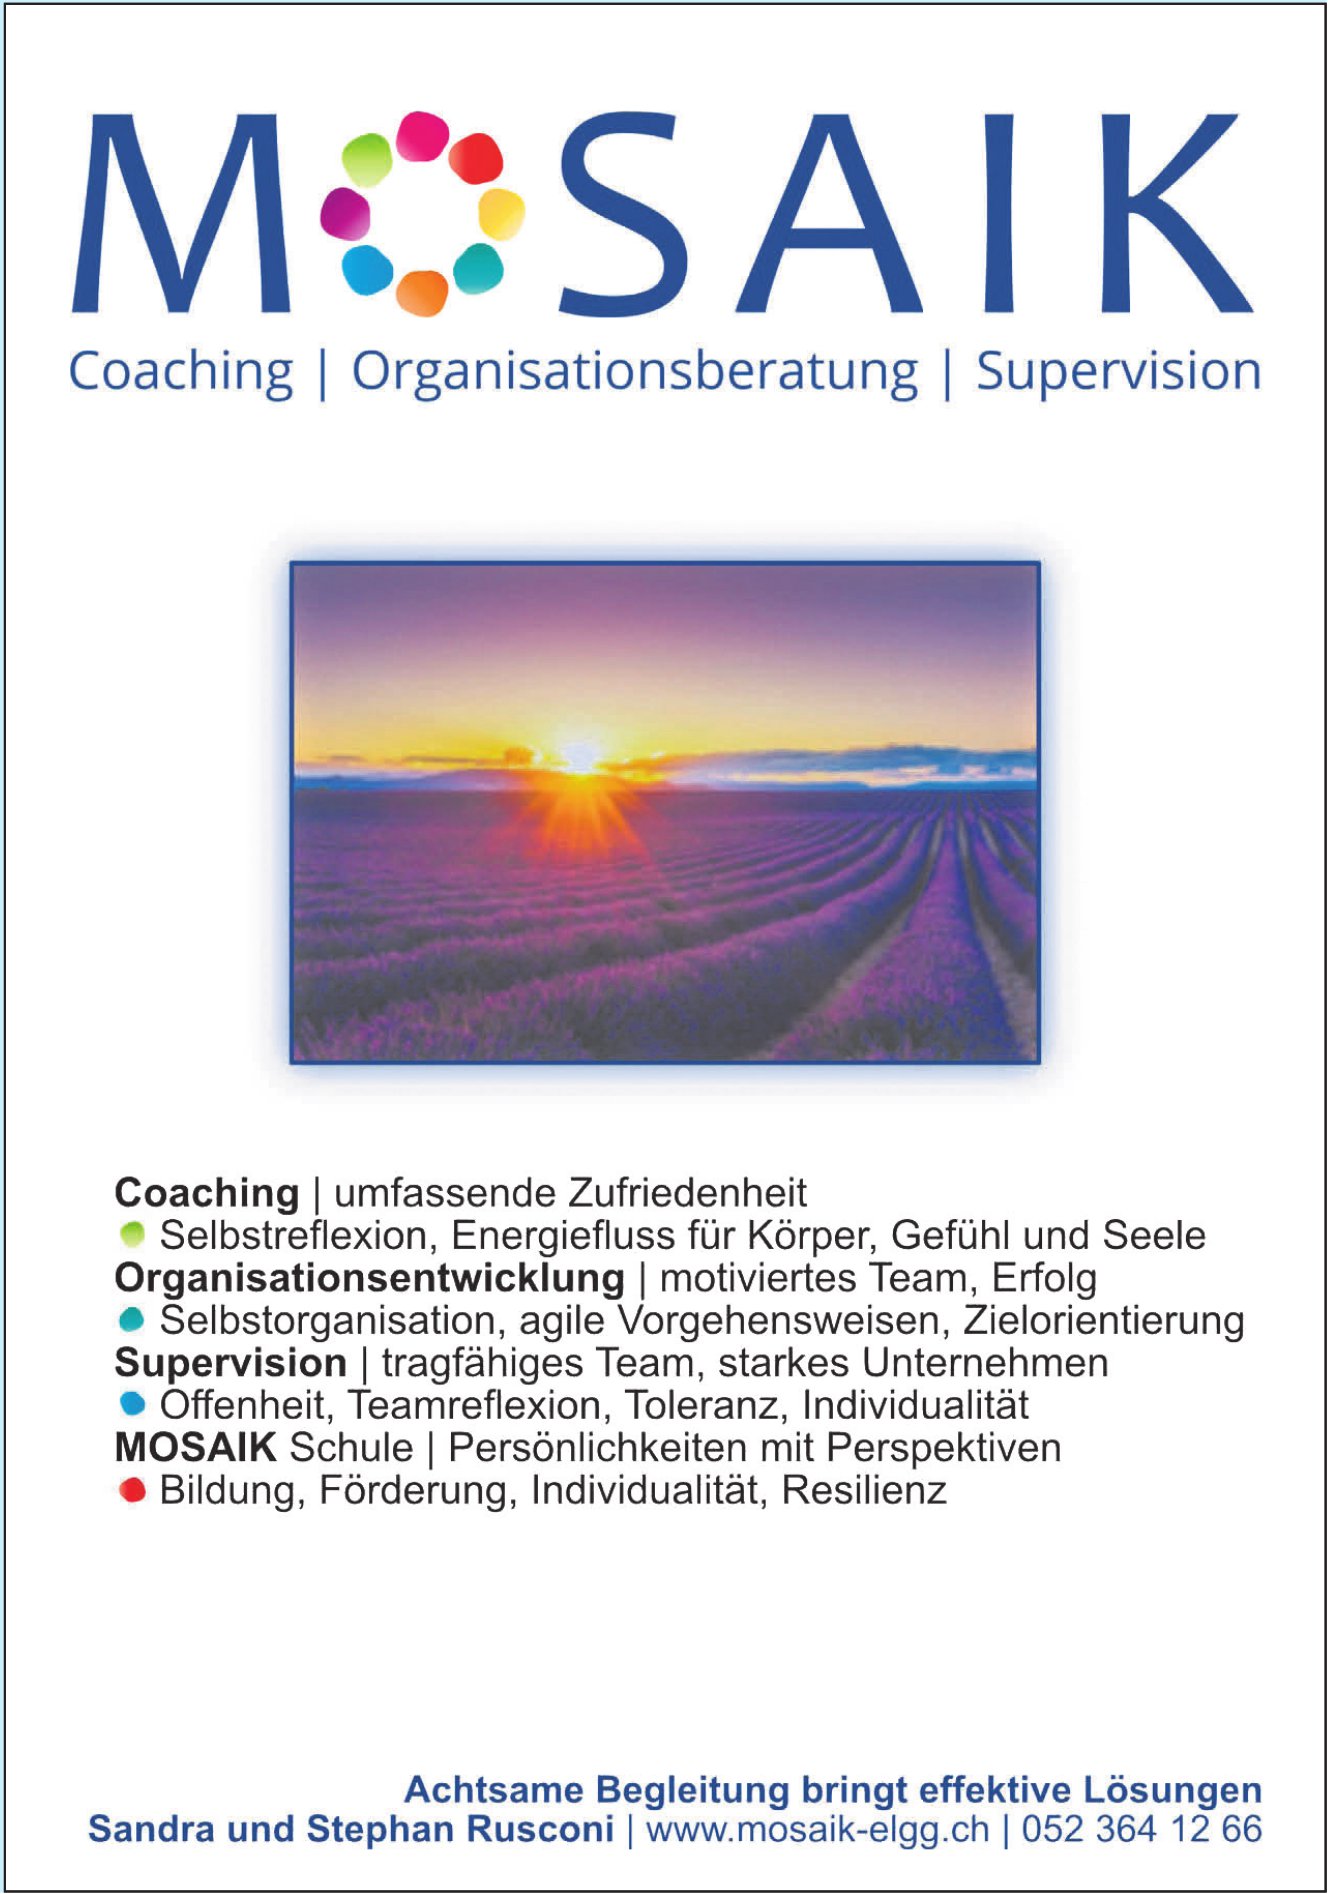 Mosaik, Elgg - Coaching, Organisationsberatung & Supervision